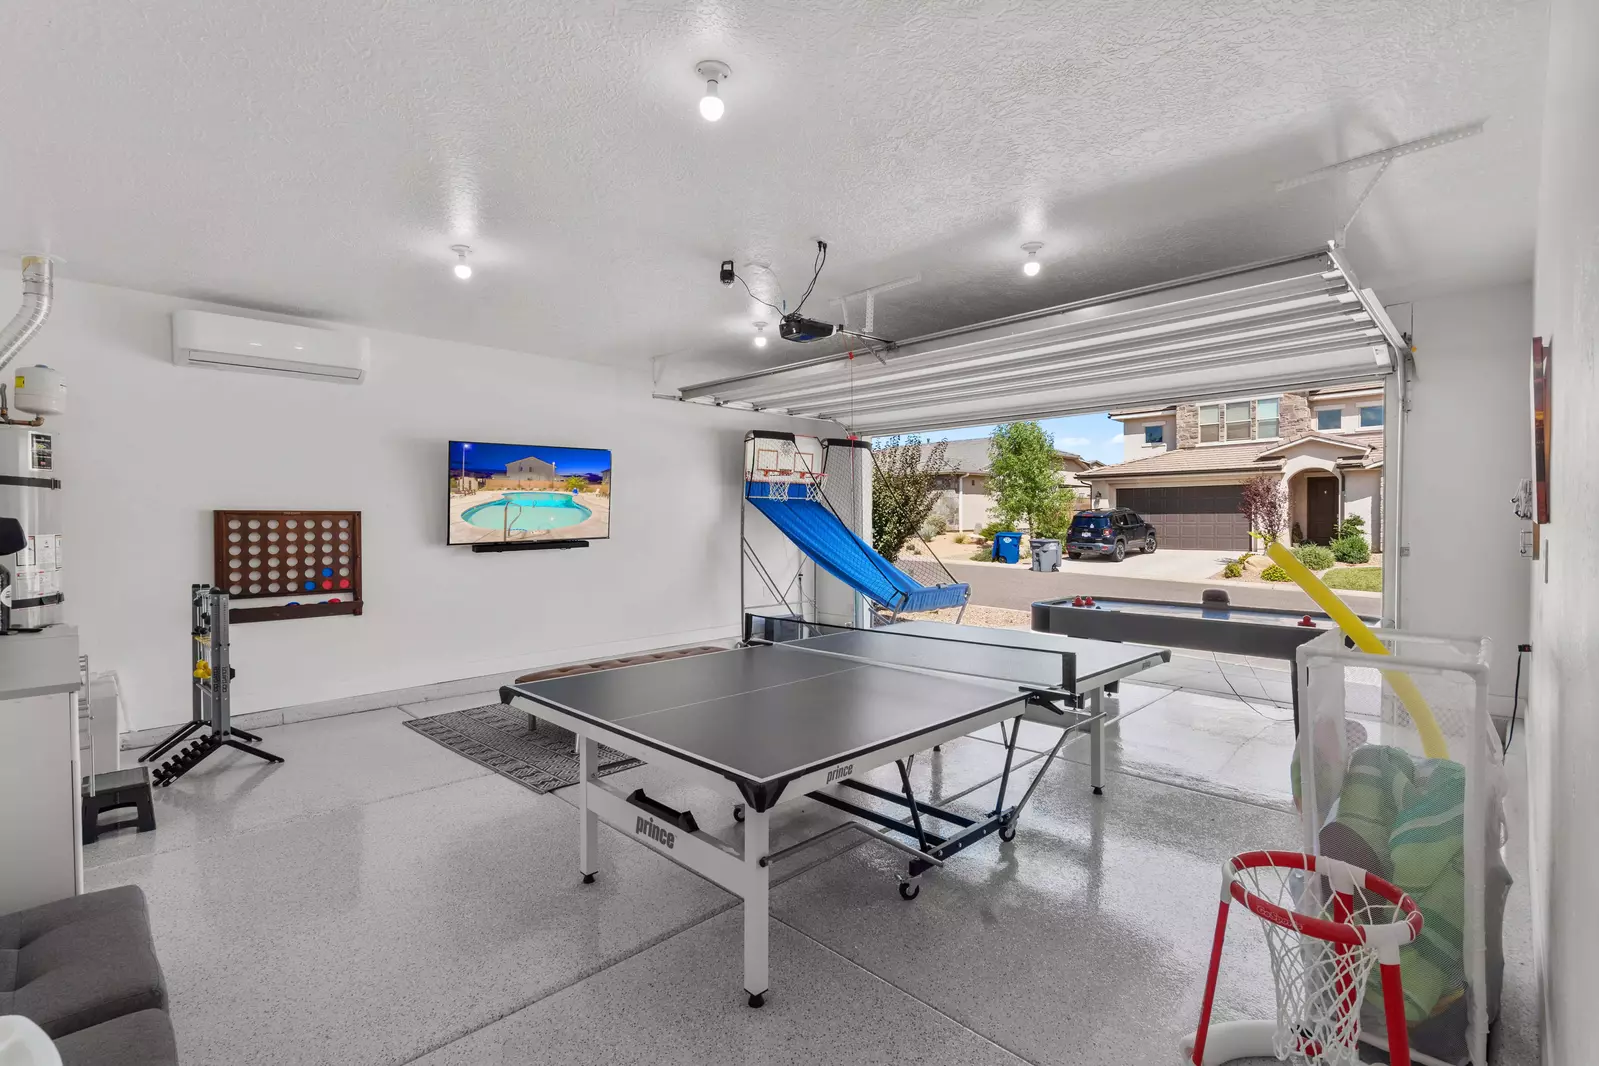 Garage Game Room: Air Hockey, Ping Pong, Shoot Out